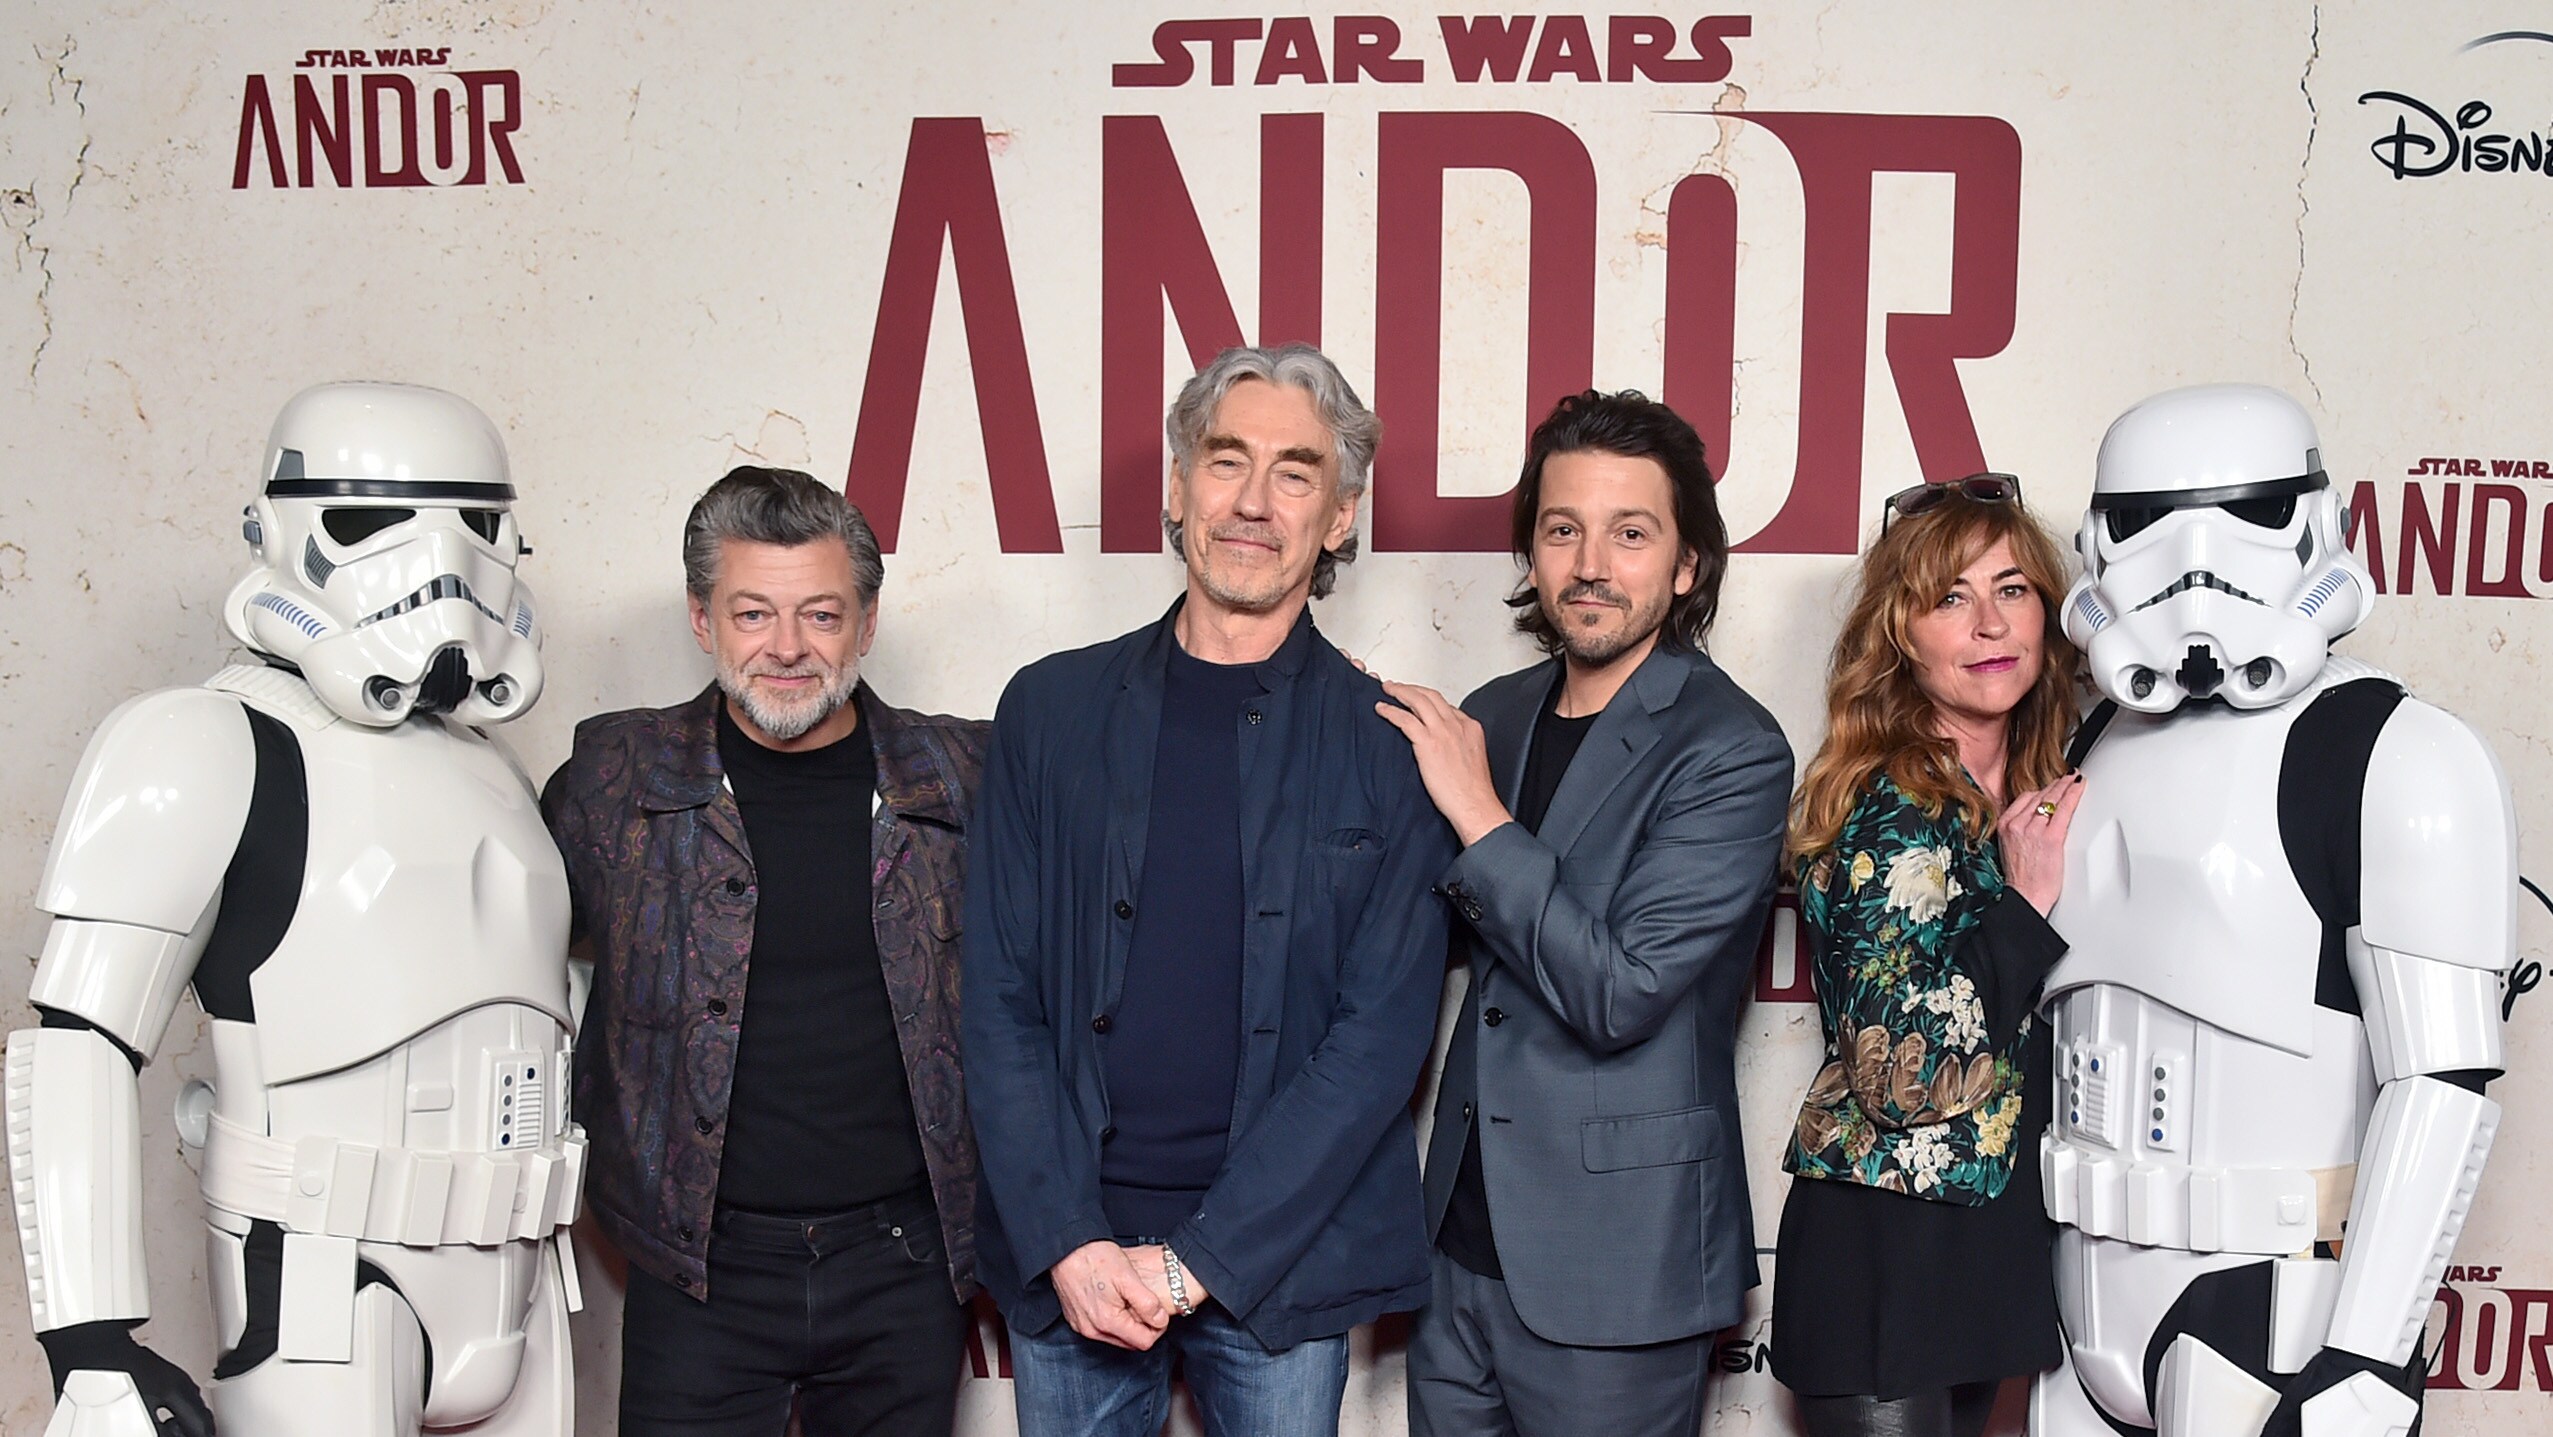 Disney+ Shares Photos From Lucasfilm’s “Andor” Season 1 Emmy FYC Event